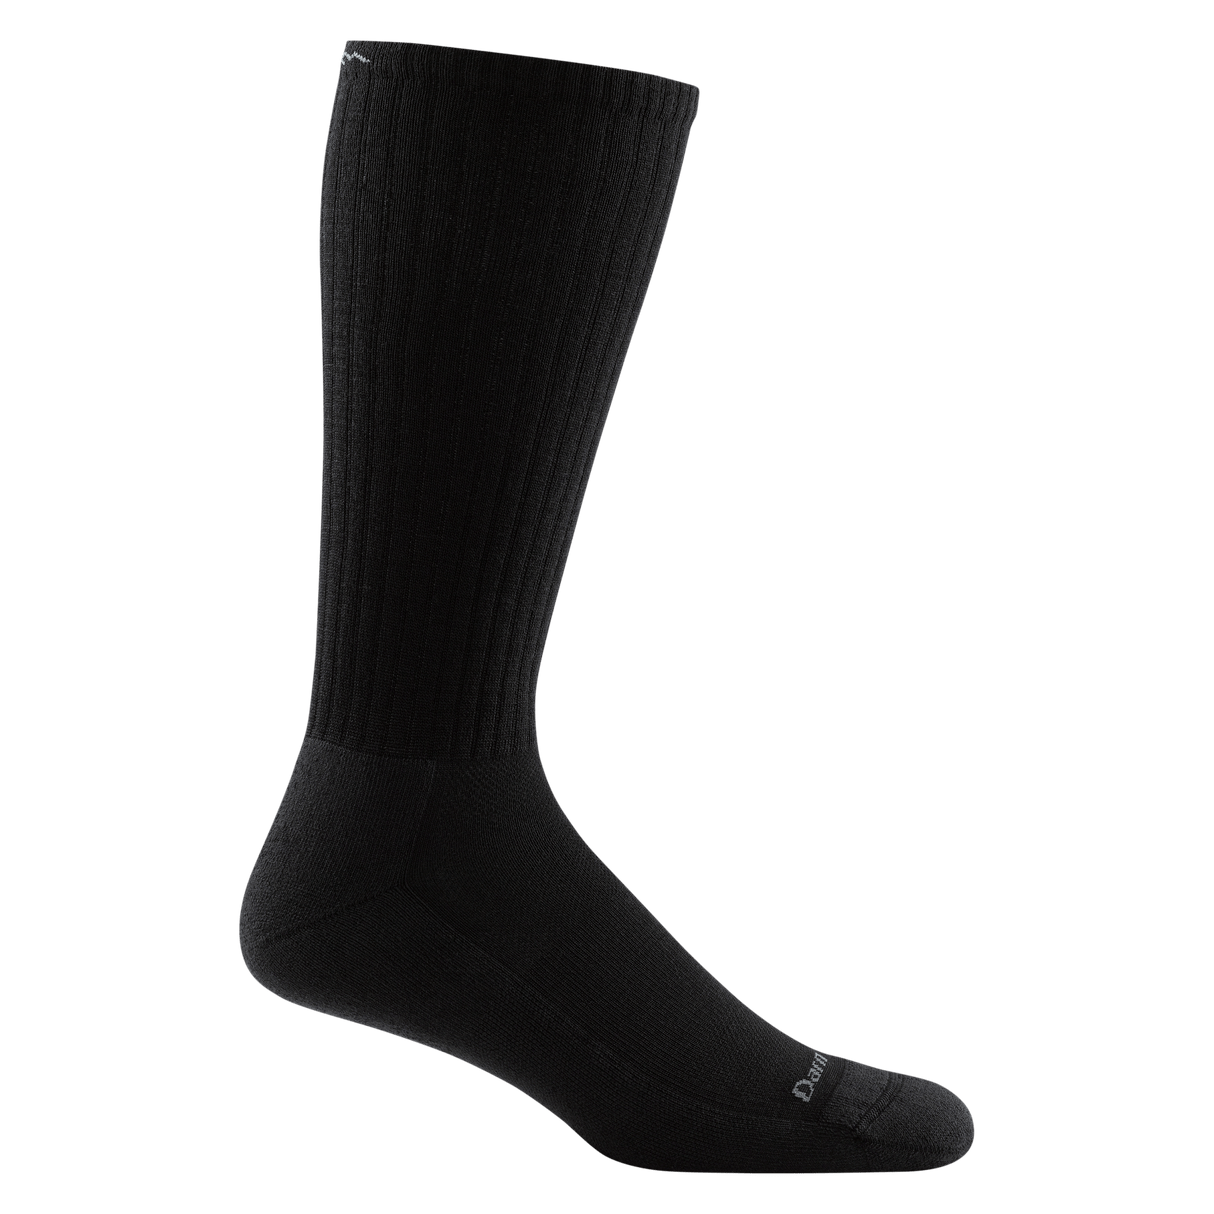 Darn Tough Mens The Standard Mid-Calf No Cushion Lightweight Lifestyle Socks  -  Small / Black